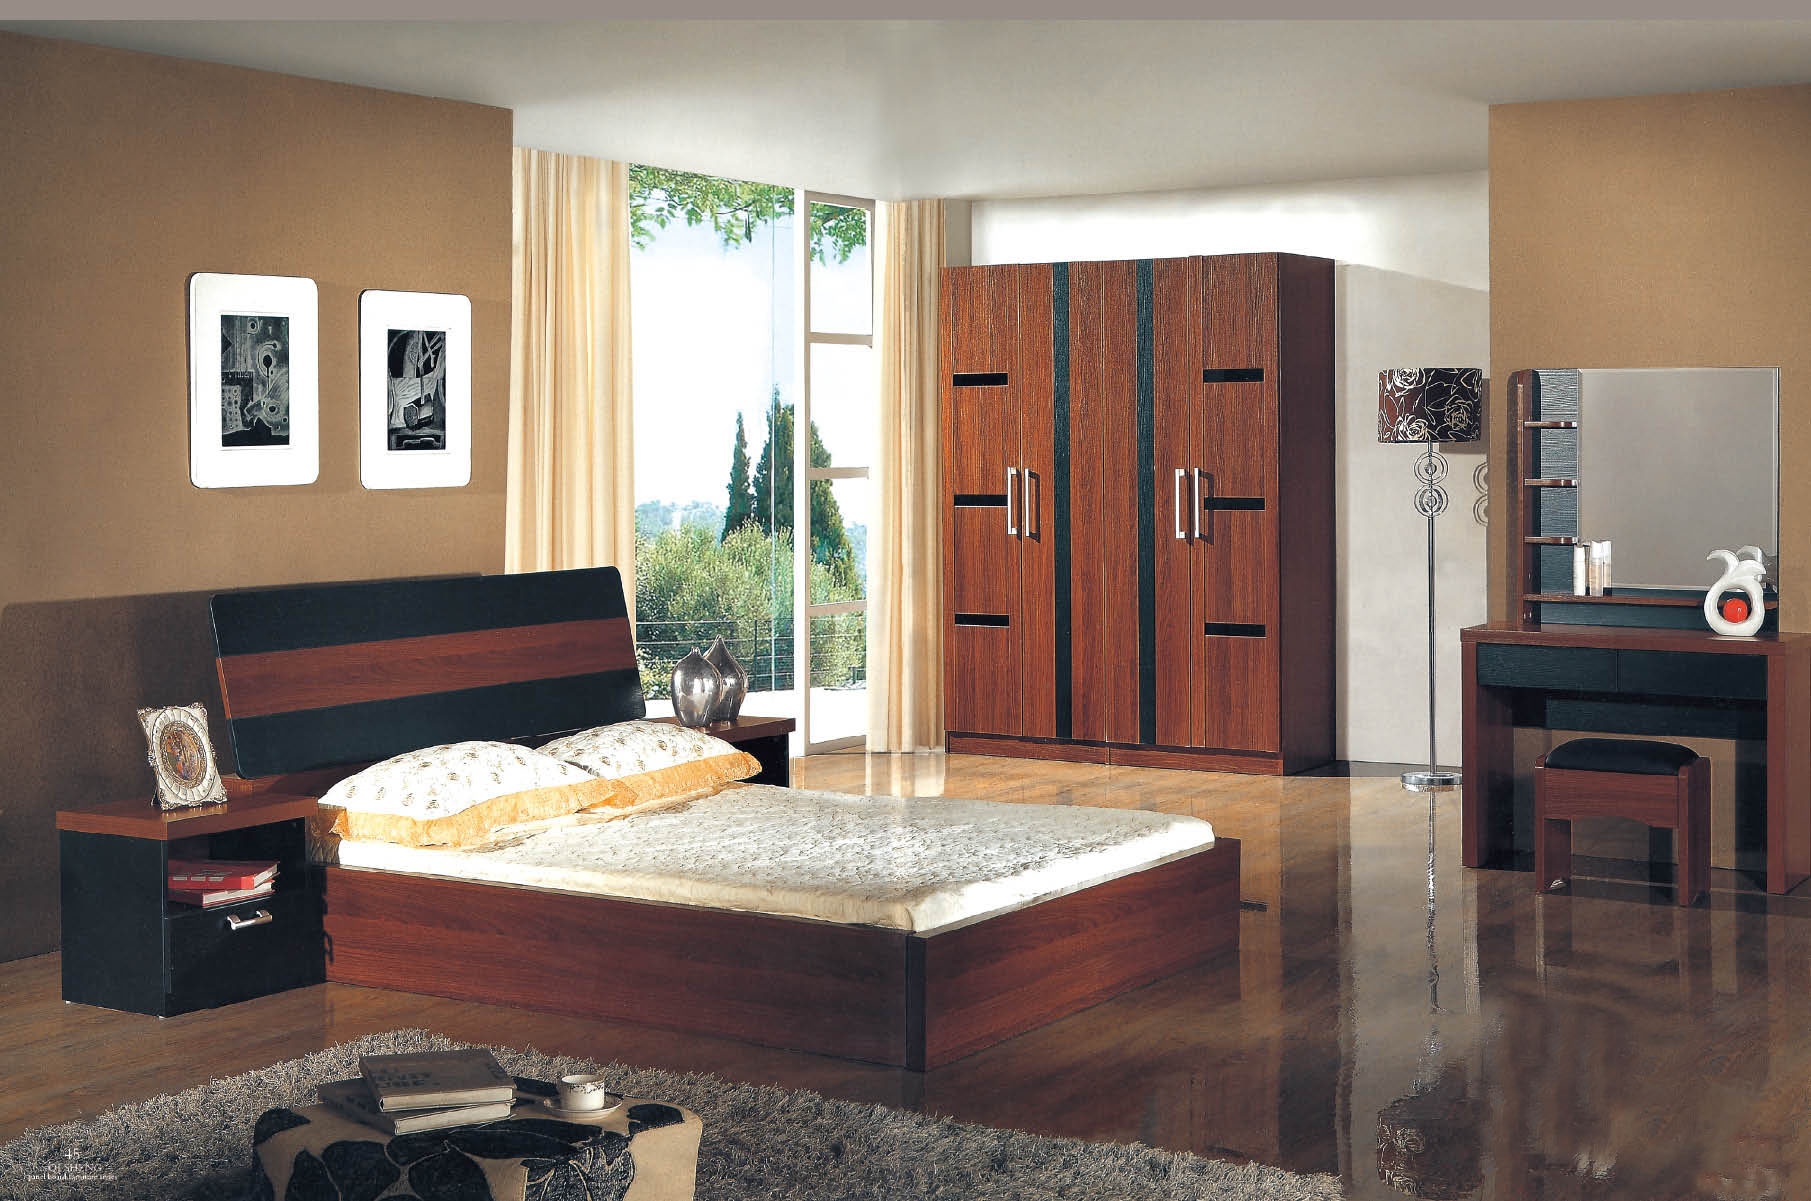 Custom Factory Modern 5 Star Hotel Room Luxury Interior Design Wooden Bedroom Furniture Set UL_L603